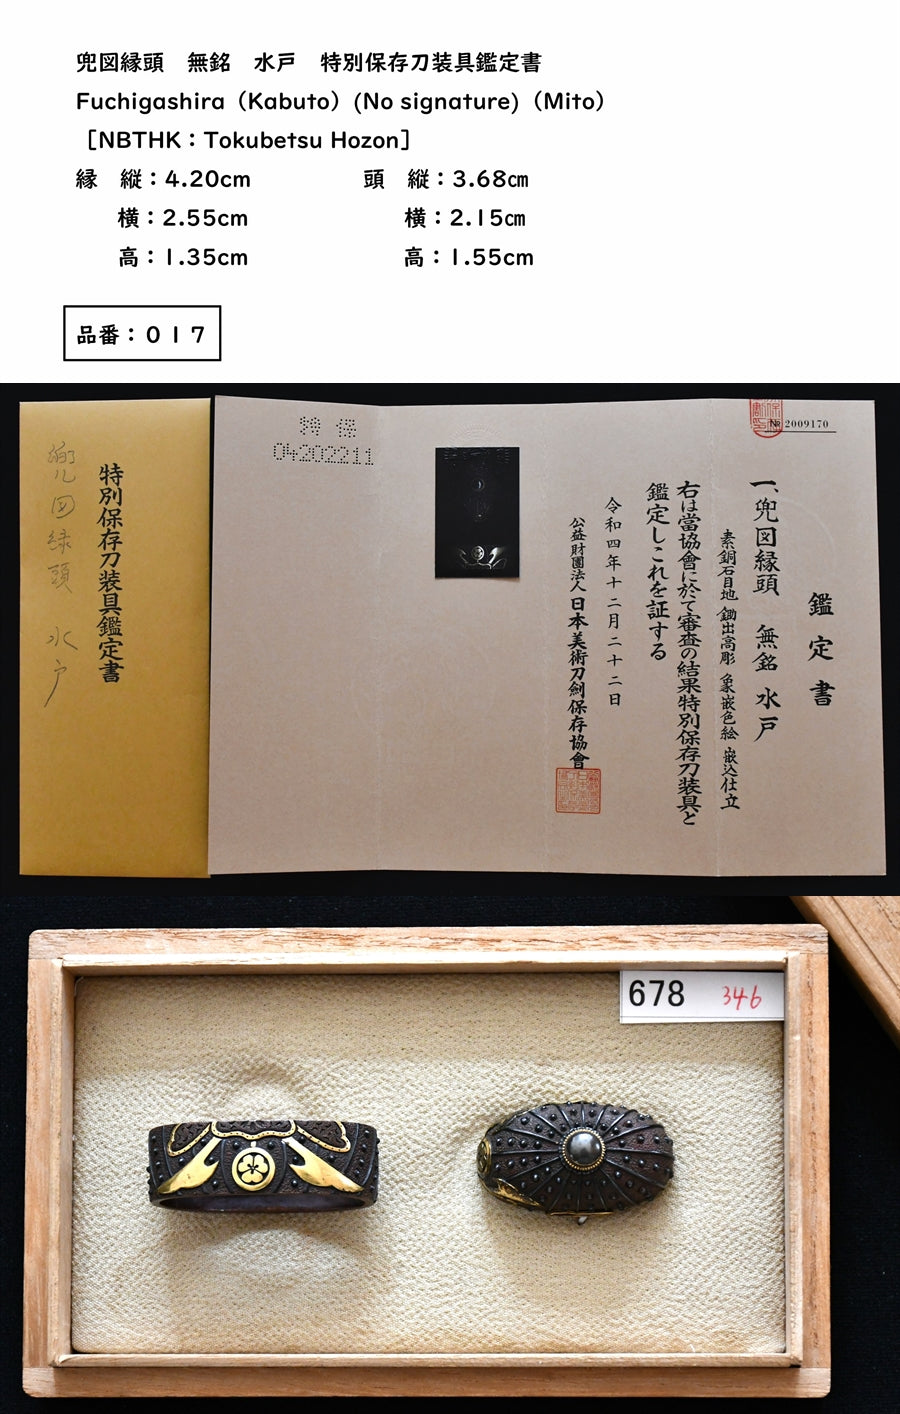 Handsmanship Mito Special Save Special Save Box Appraisal Fuchigashira (Kabuto) (No Signature) (MITO) [NBTHK: TOKUBETSU HOZON] Part number: 017